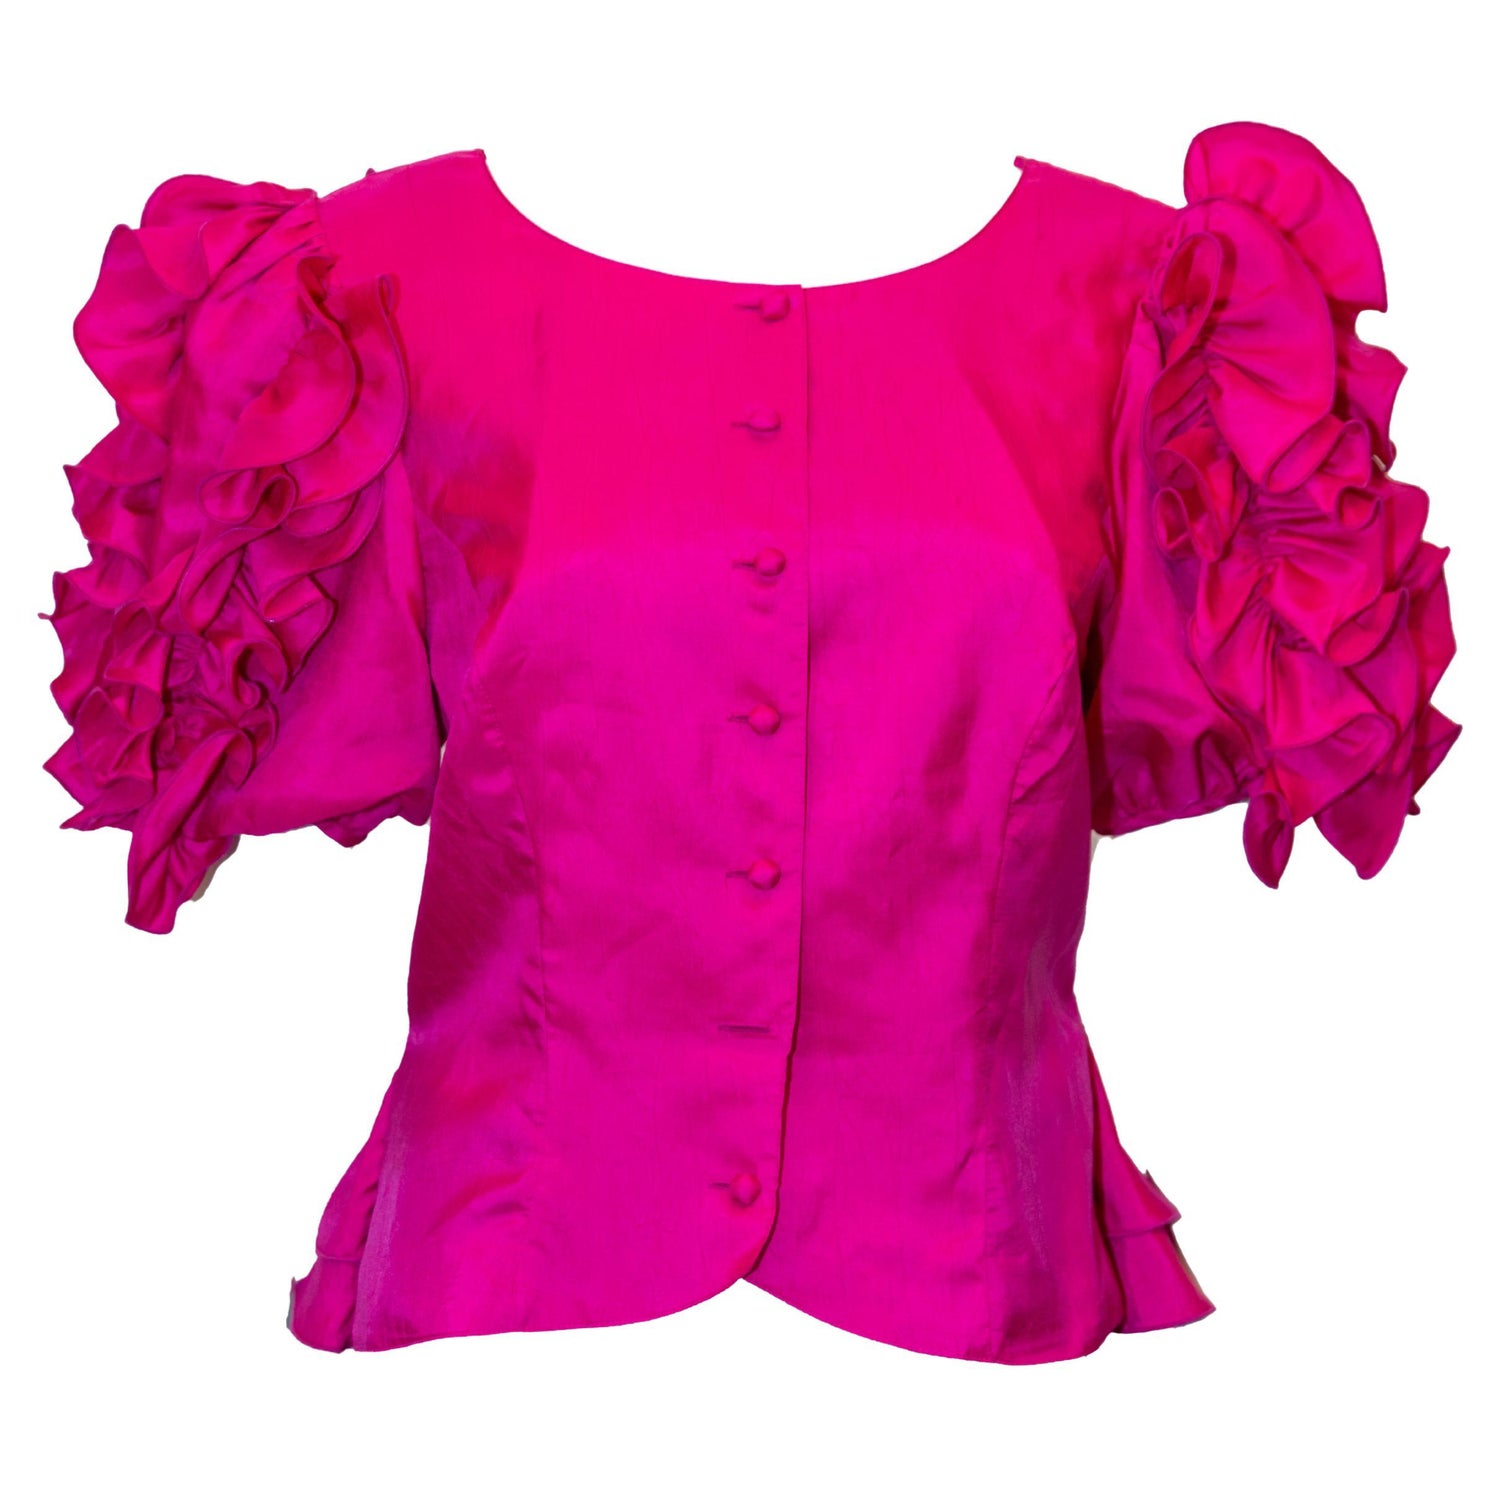 Vera Mont - For Sale on 1stDibs | vera mont dress, vera mont clothing, vera  mont paris